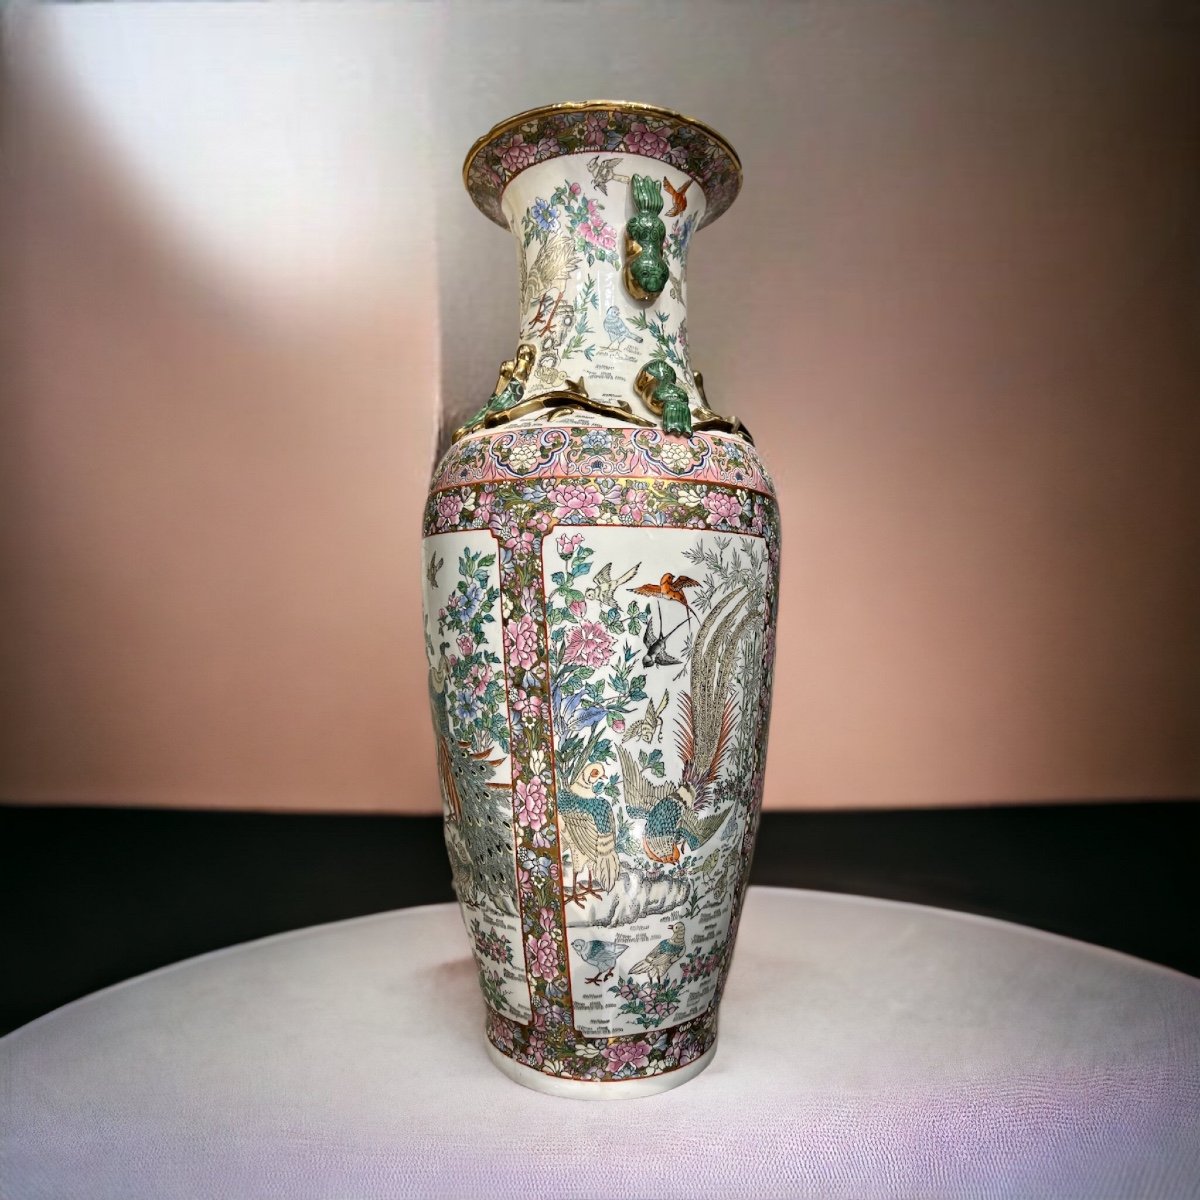 Imposing Polychrome Vase From China Signed